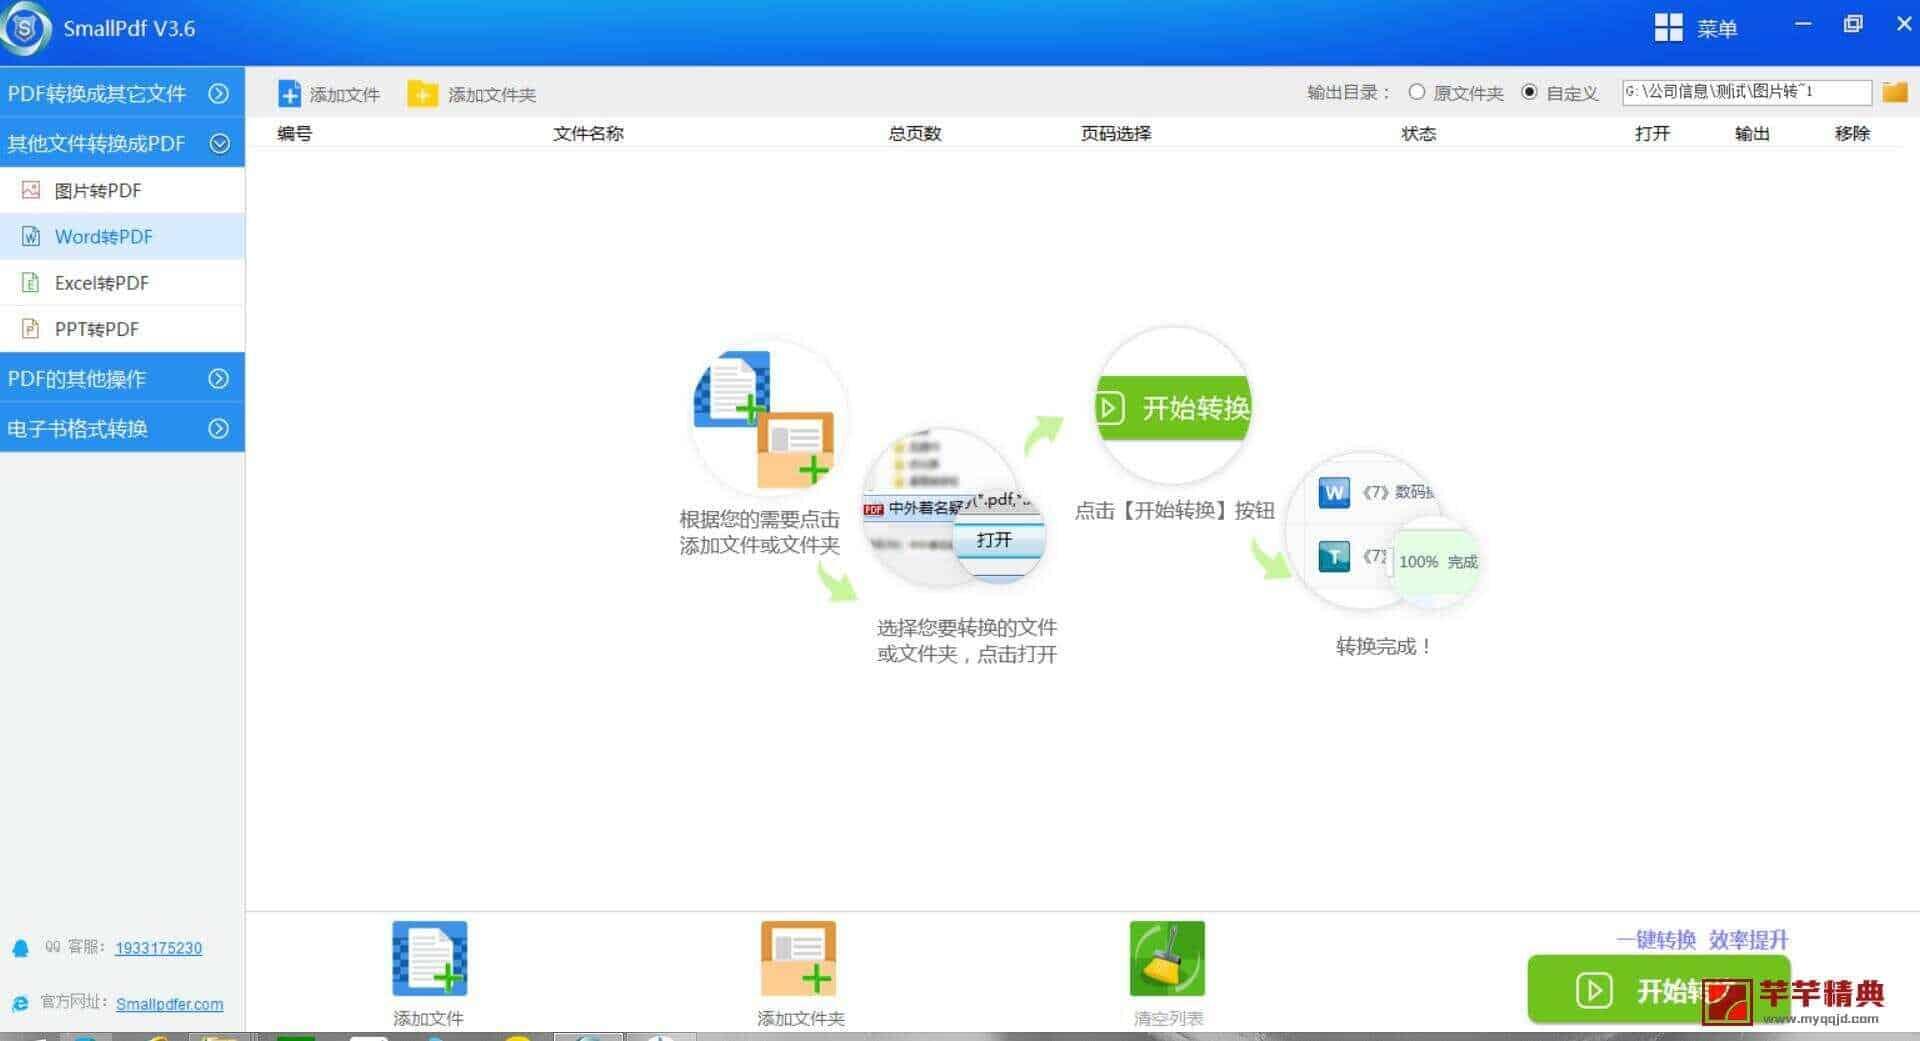 PDF转换器 Small v3.6 中文注册版 支持多种格式转换